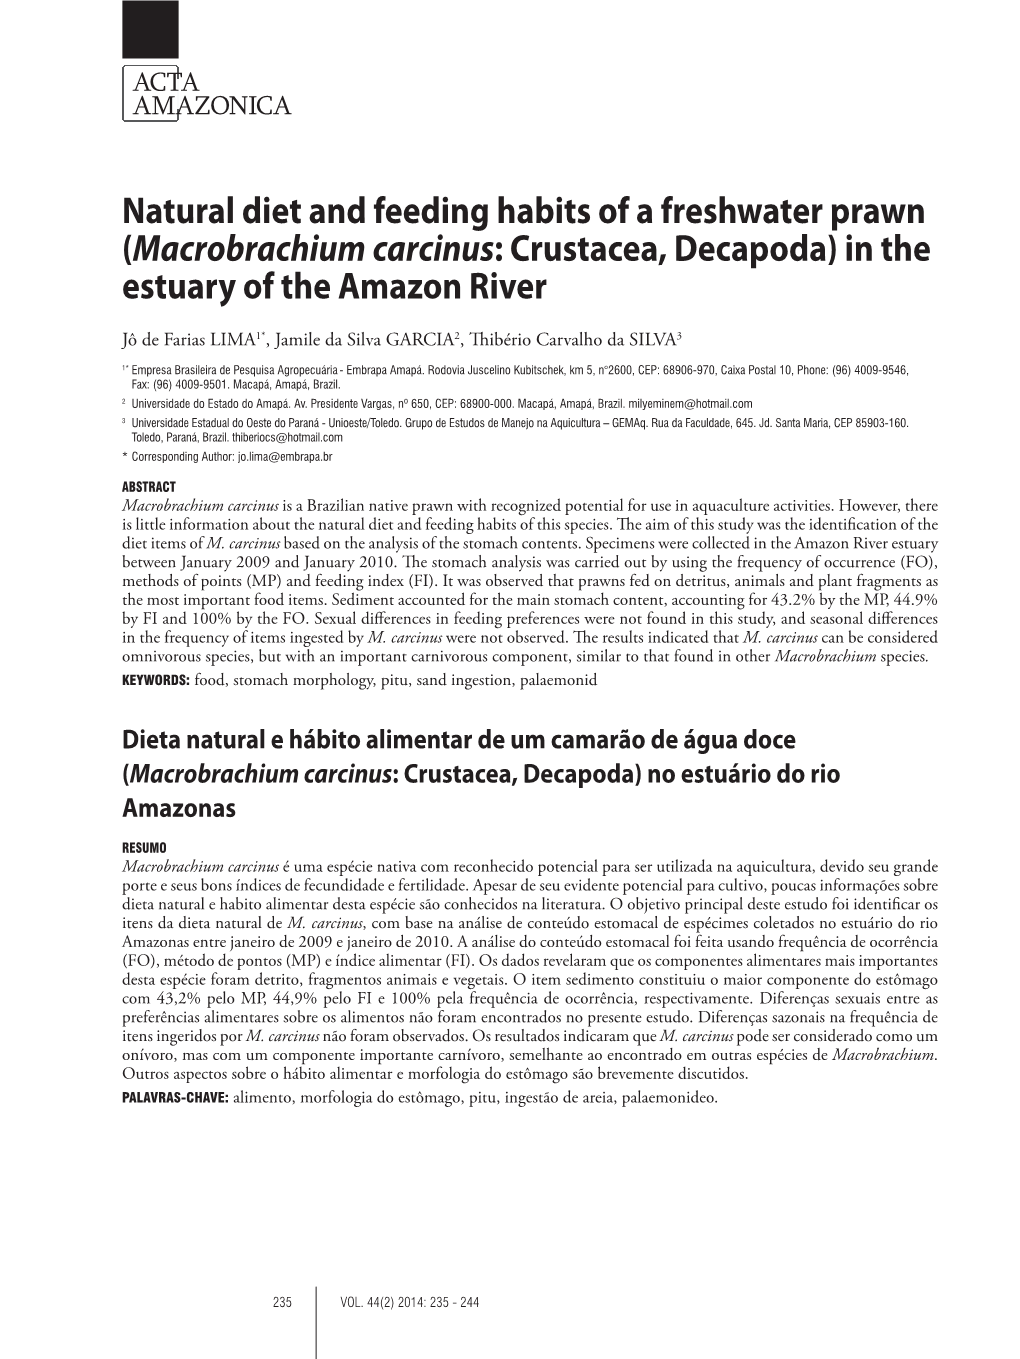 Natural Diet and Feeding Habits of a Freshwater Prawn (Macrobrachium Carcinus: Crustacea, Decapoda) in the Estuary of the Amazon River